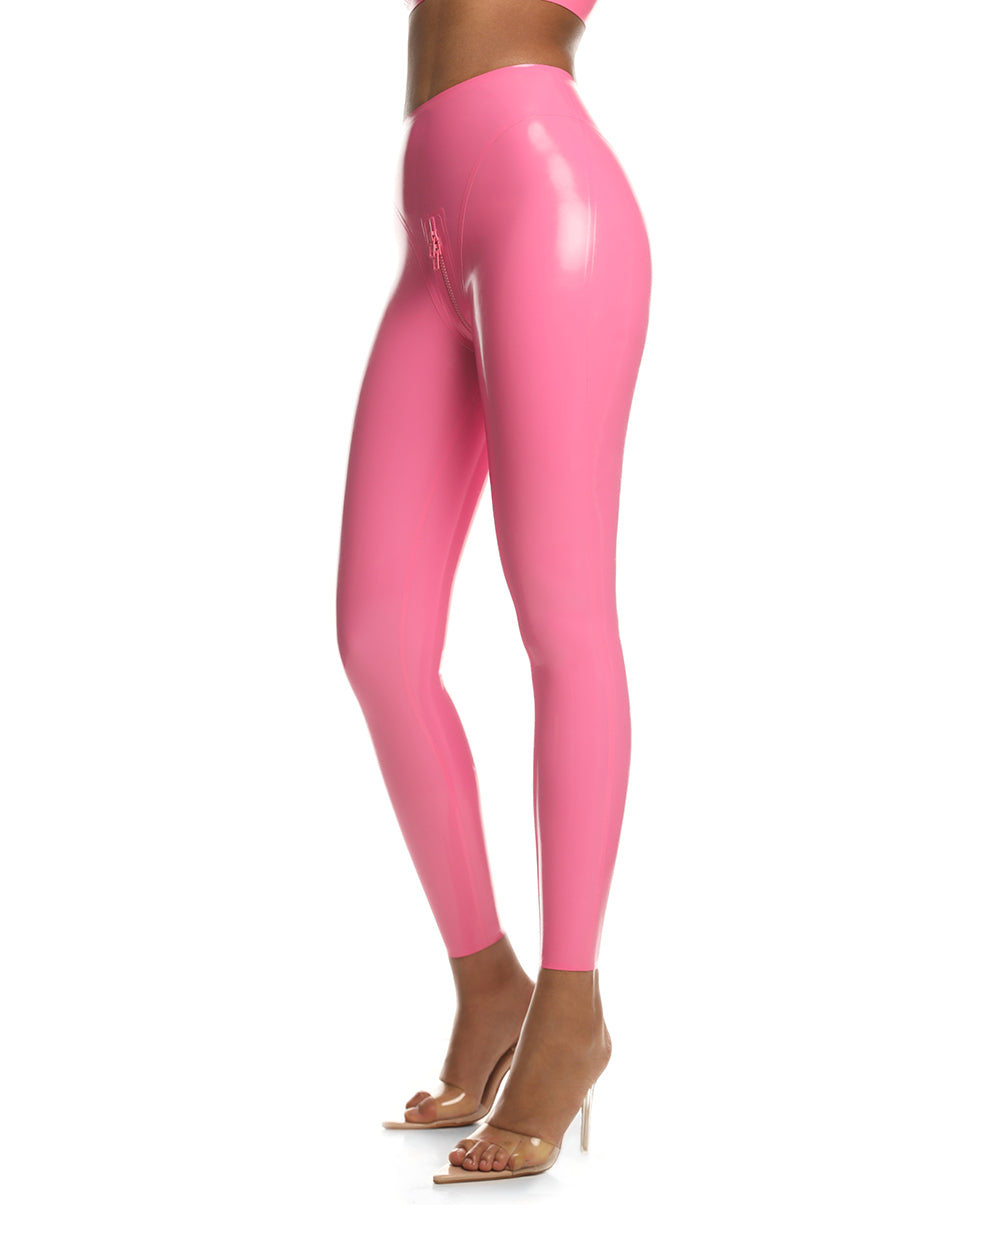 inhzoy Women's Shiny Yoga Pants Dance Running Leggings Metallic Active  Performance Clubwear Tights Pink XL - Walmart.com